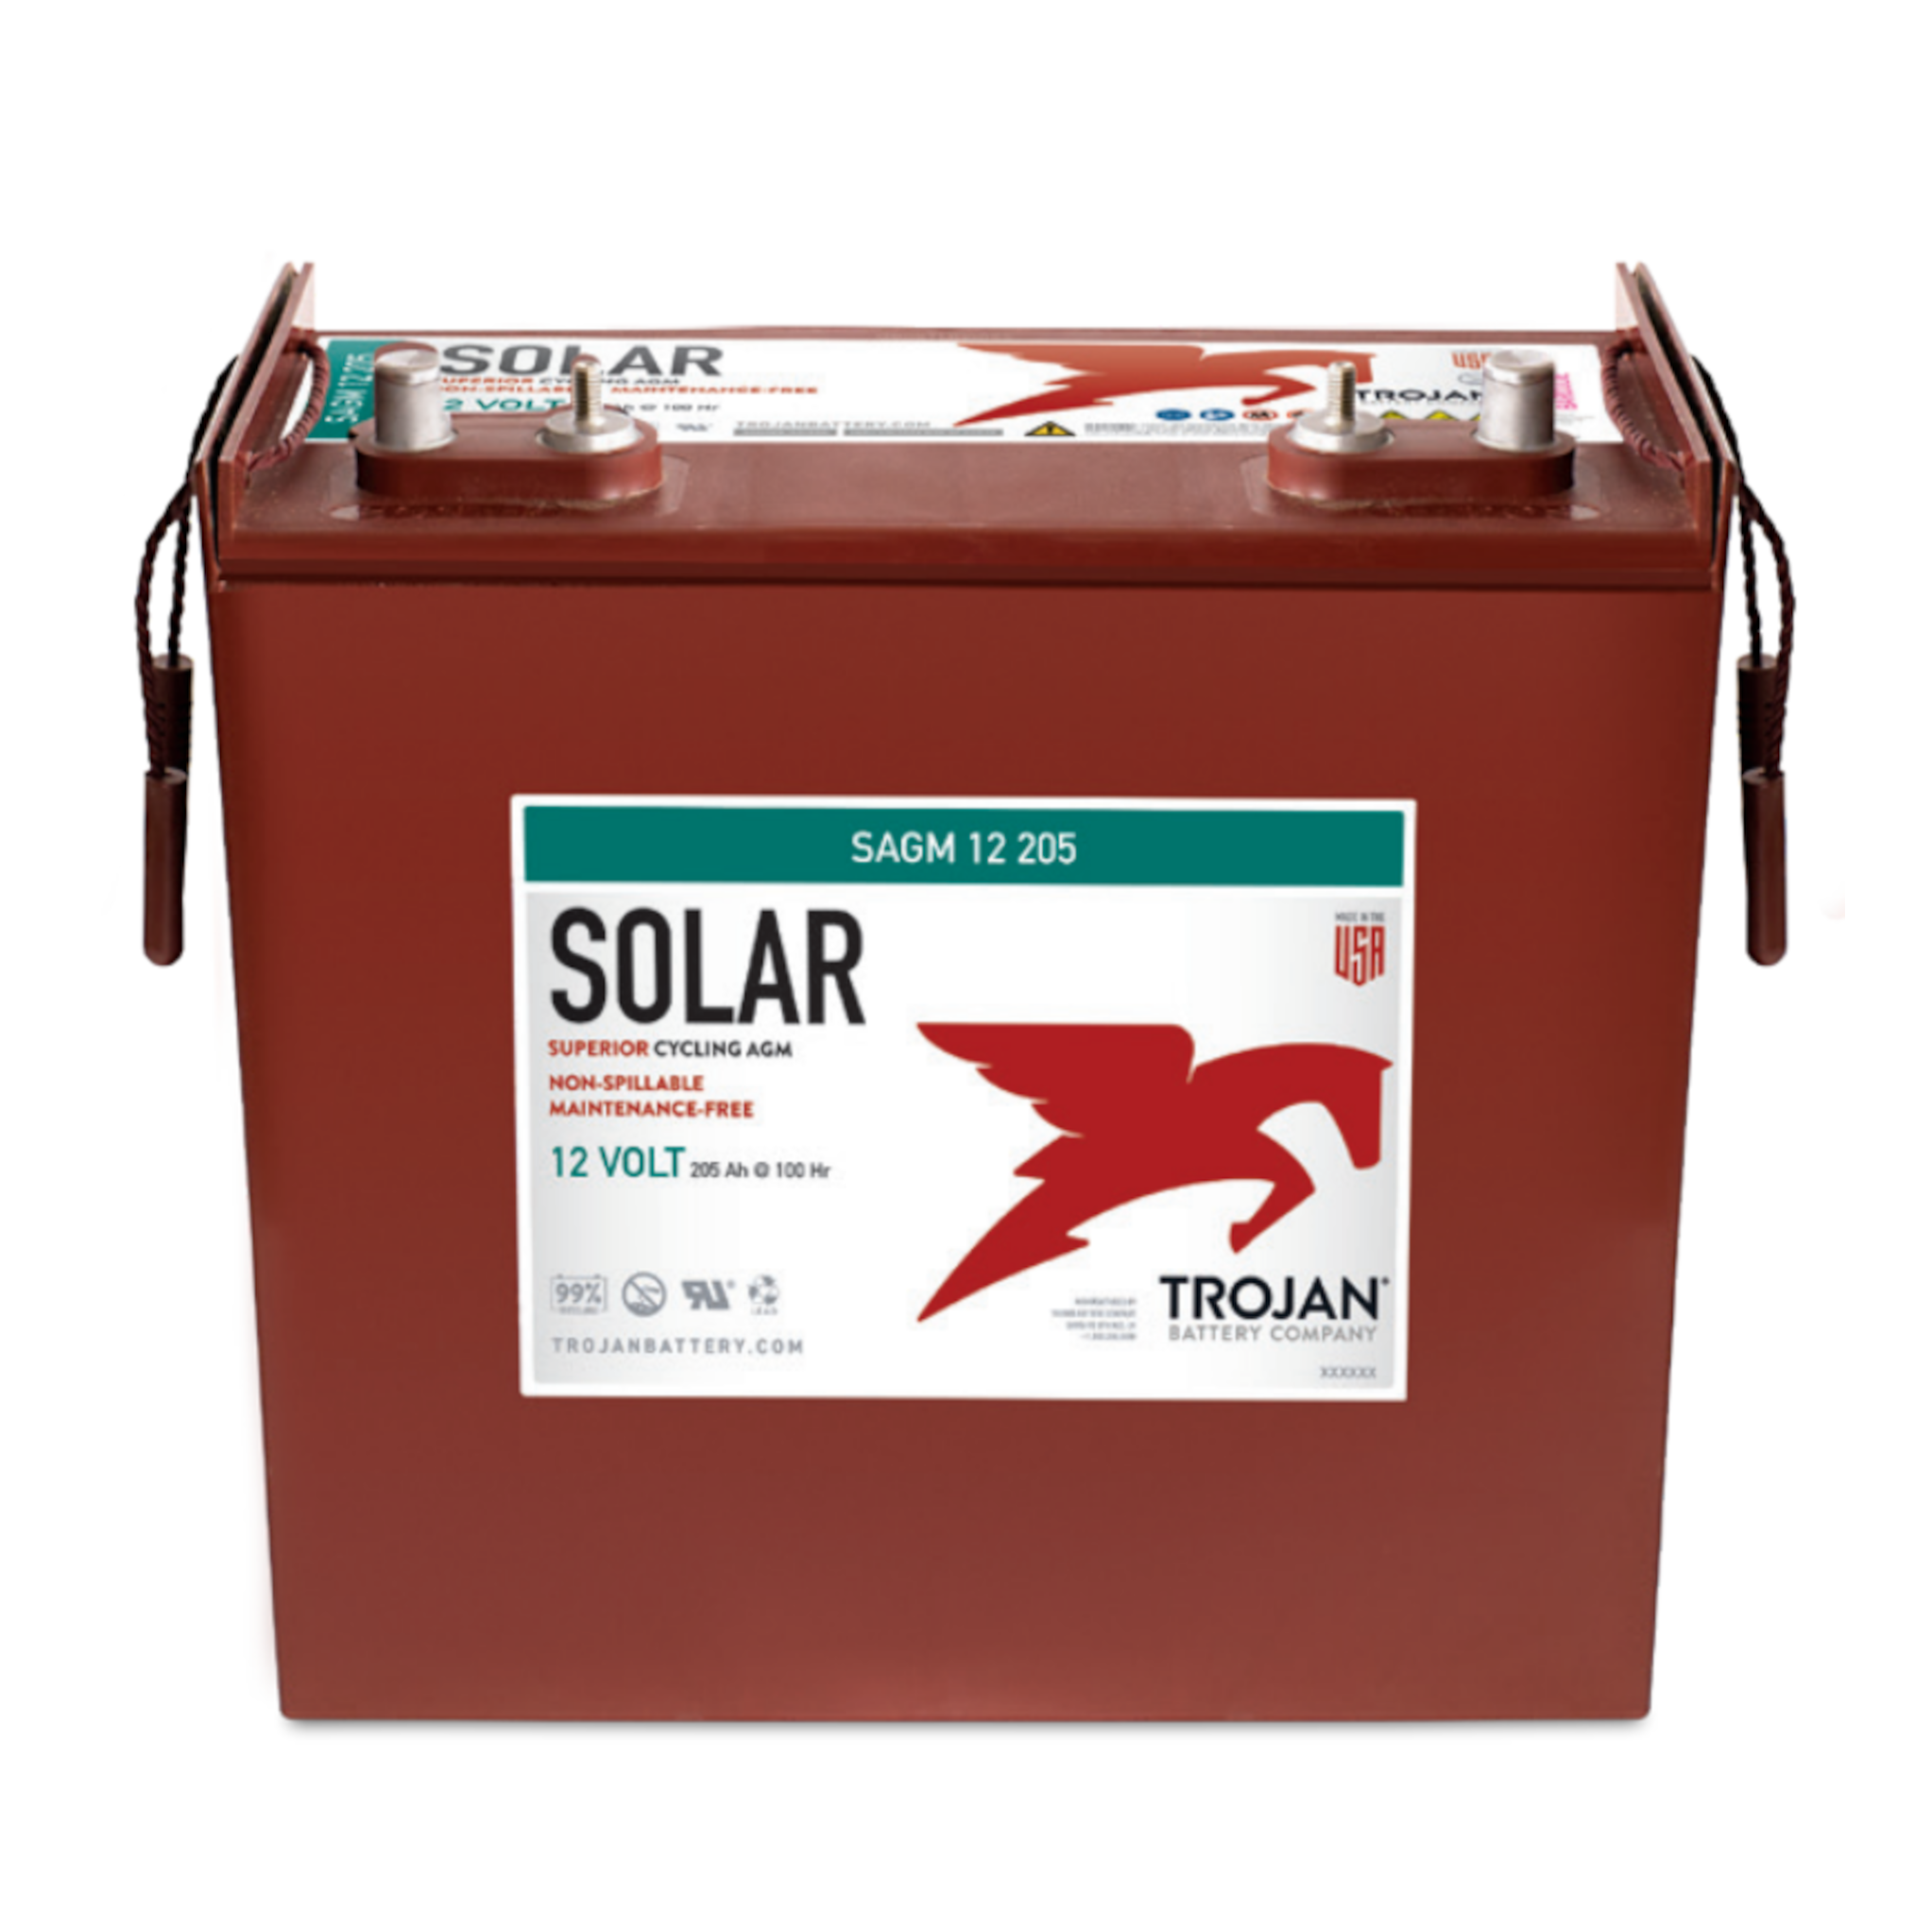 Trojan SAGM 12 205 12V Deep Cycle AGM Solar Battery